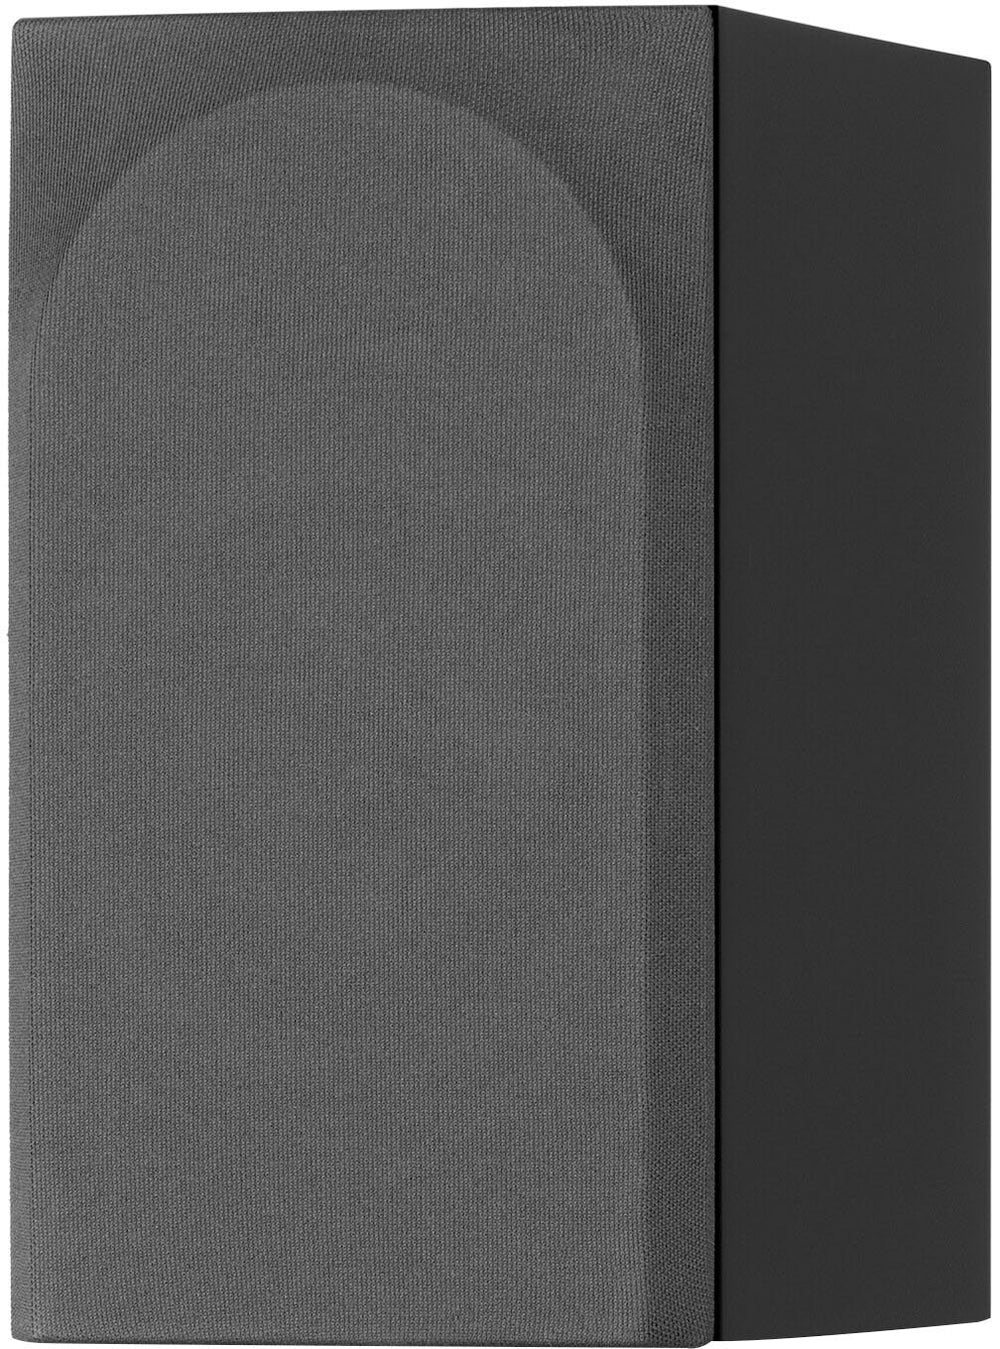 Bowers & Wilkins - 700 Series 3 Bookshelf Speaker w/5" midbass (pair) - Gloss Black_1